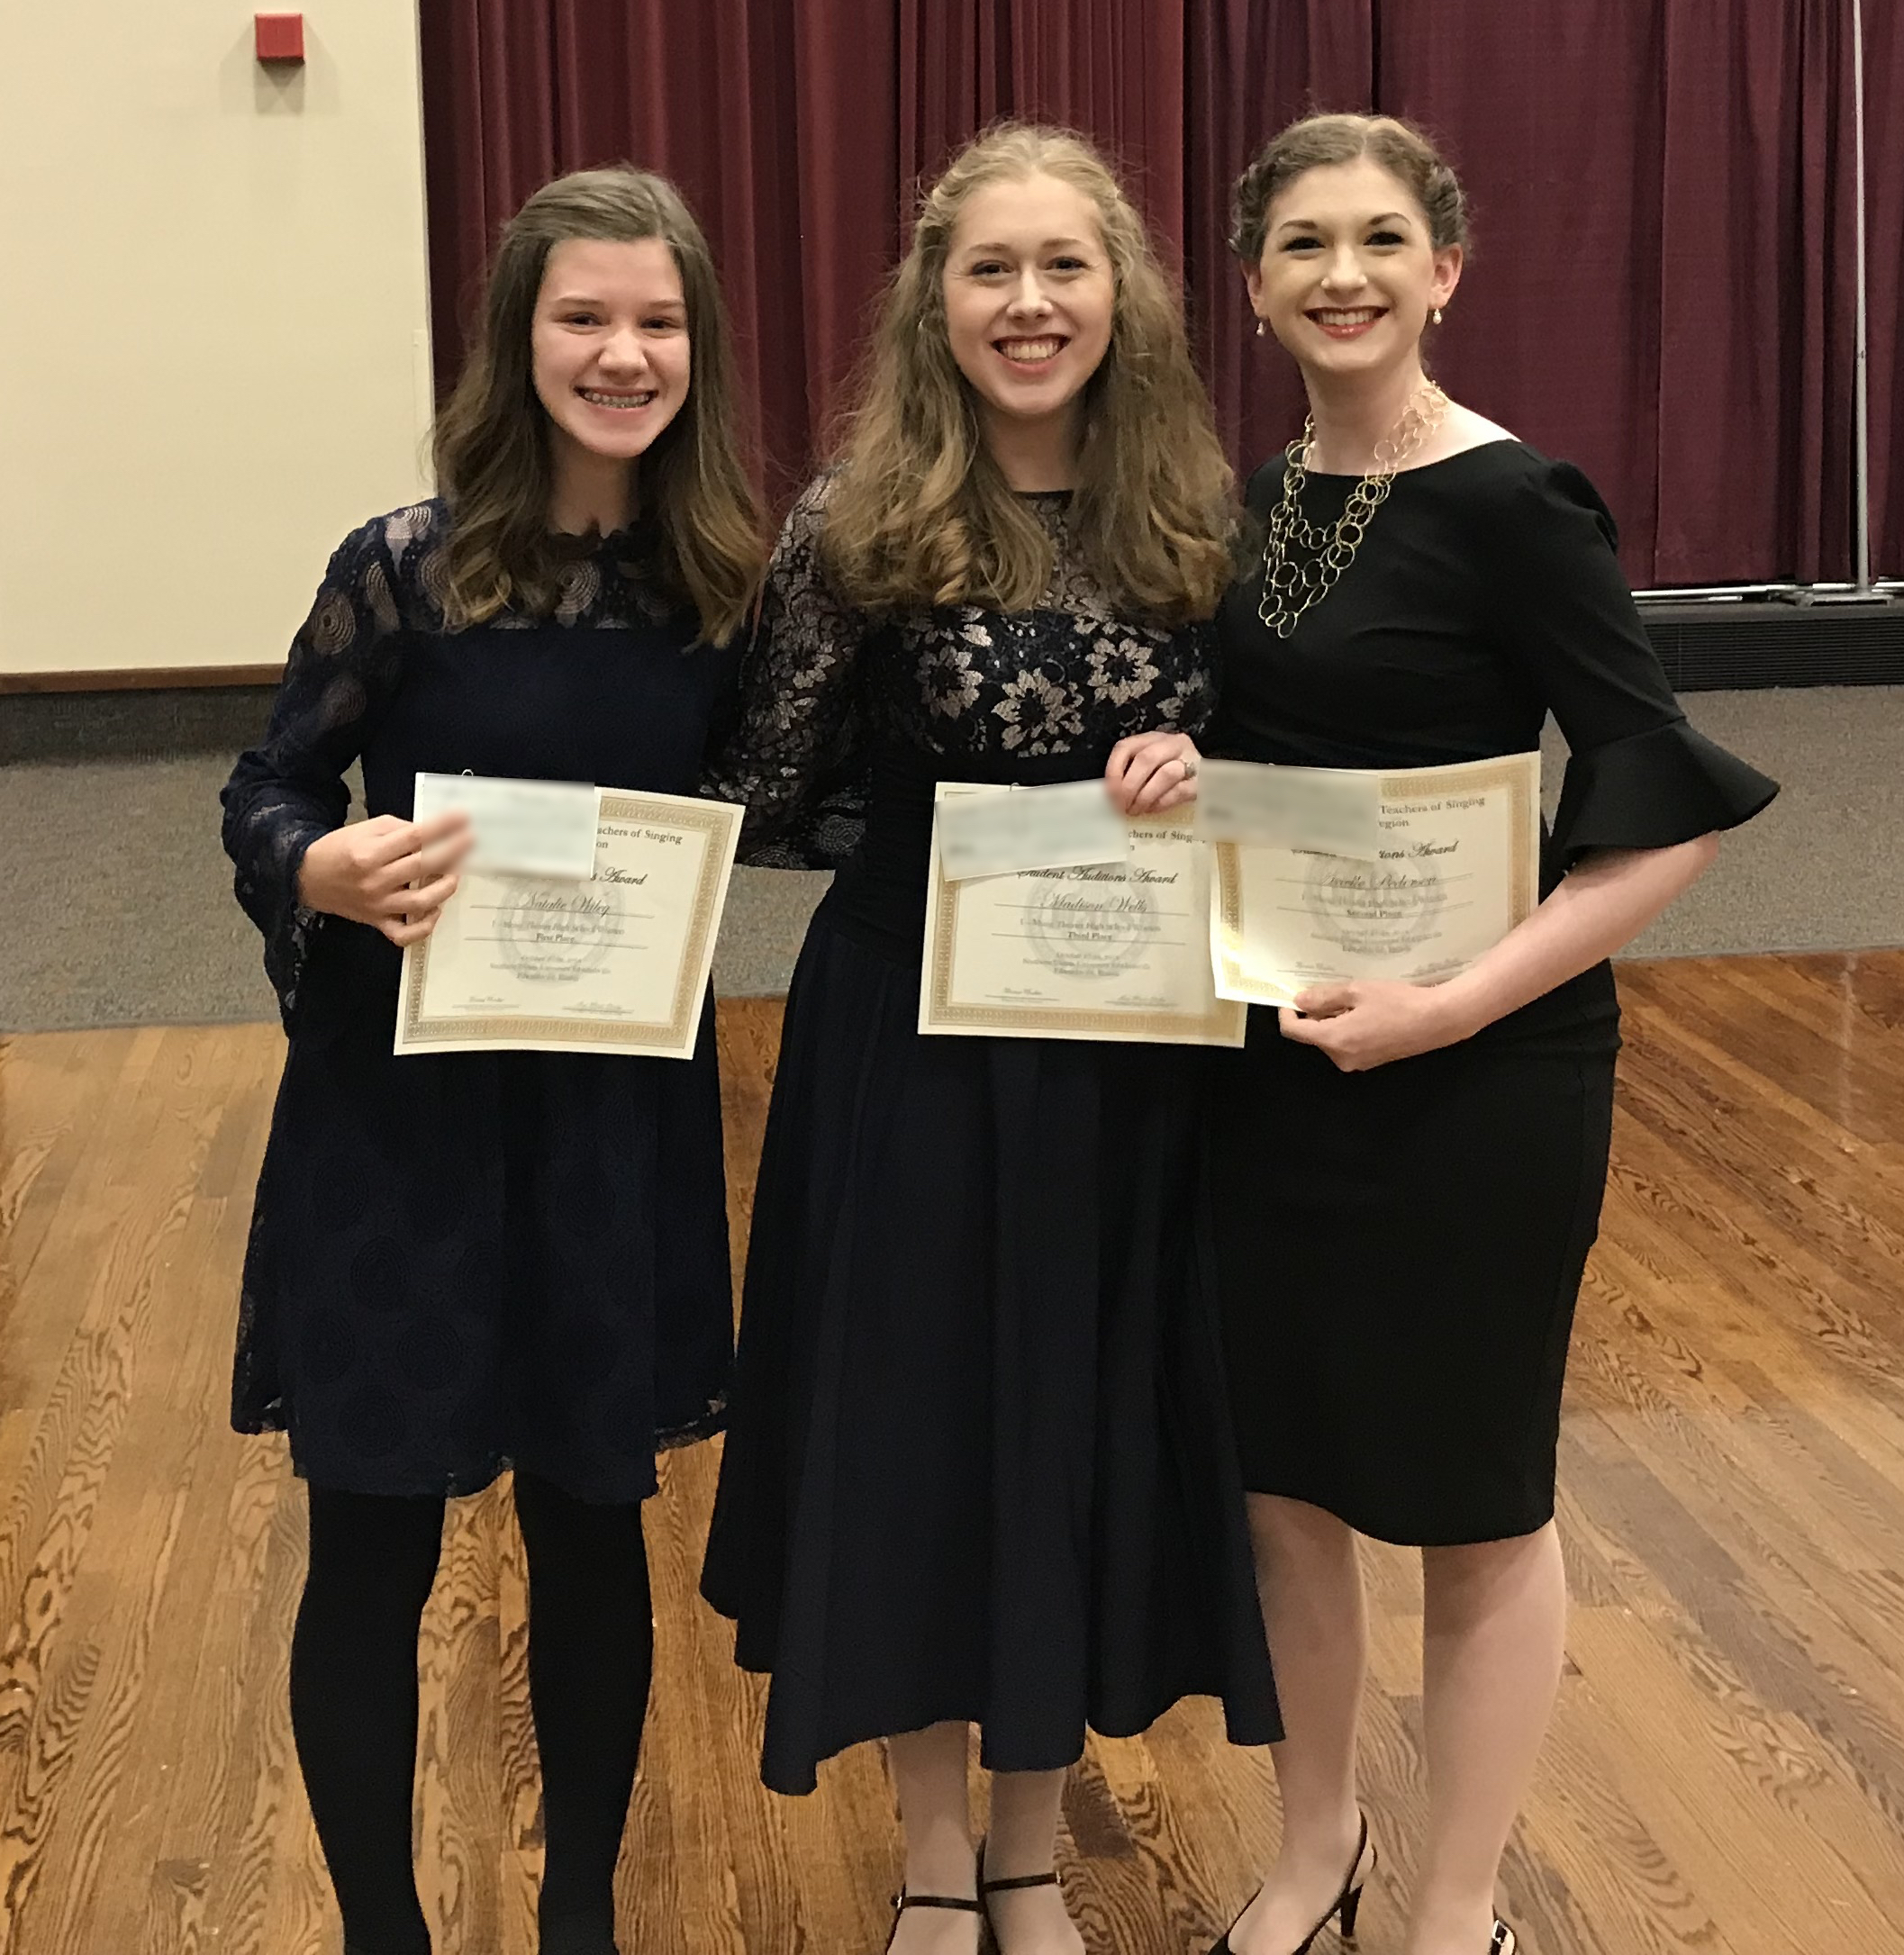 Category 1 - Music Theatre High School Women